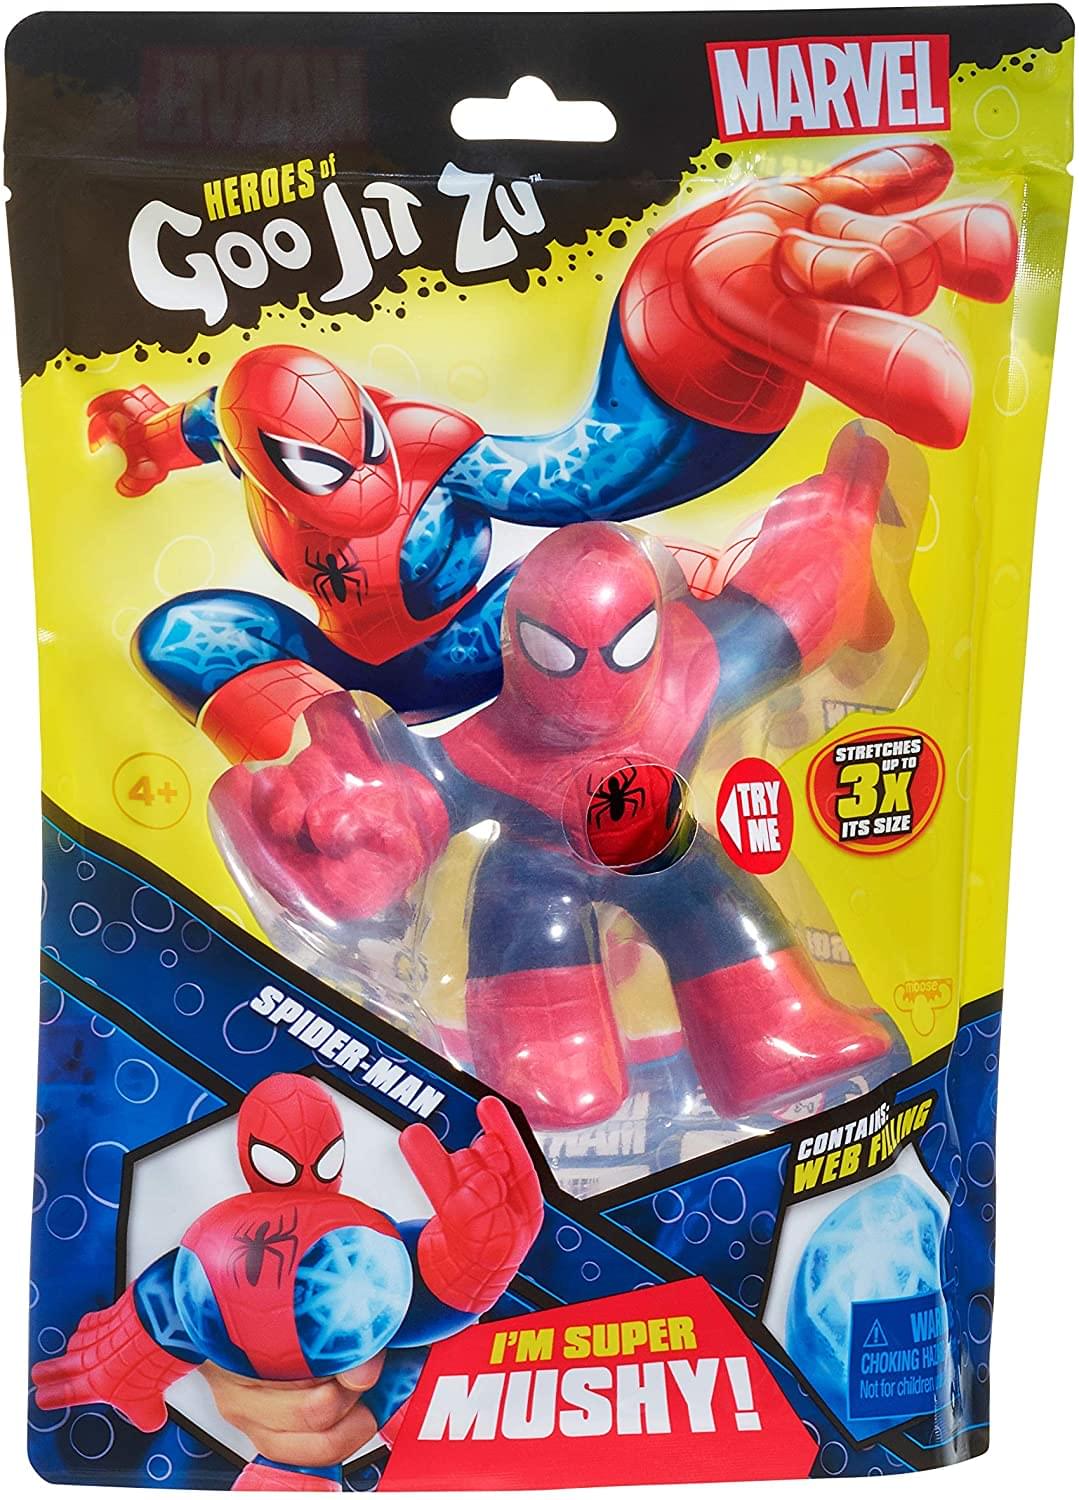 Marvel Heroes of Goo Jit Zu Squishy Figure | Spider-Man